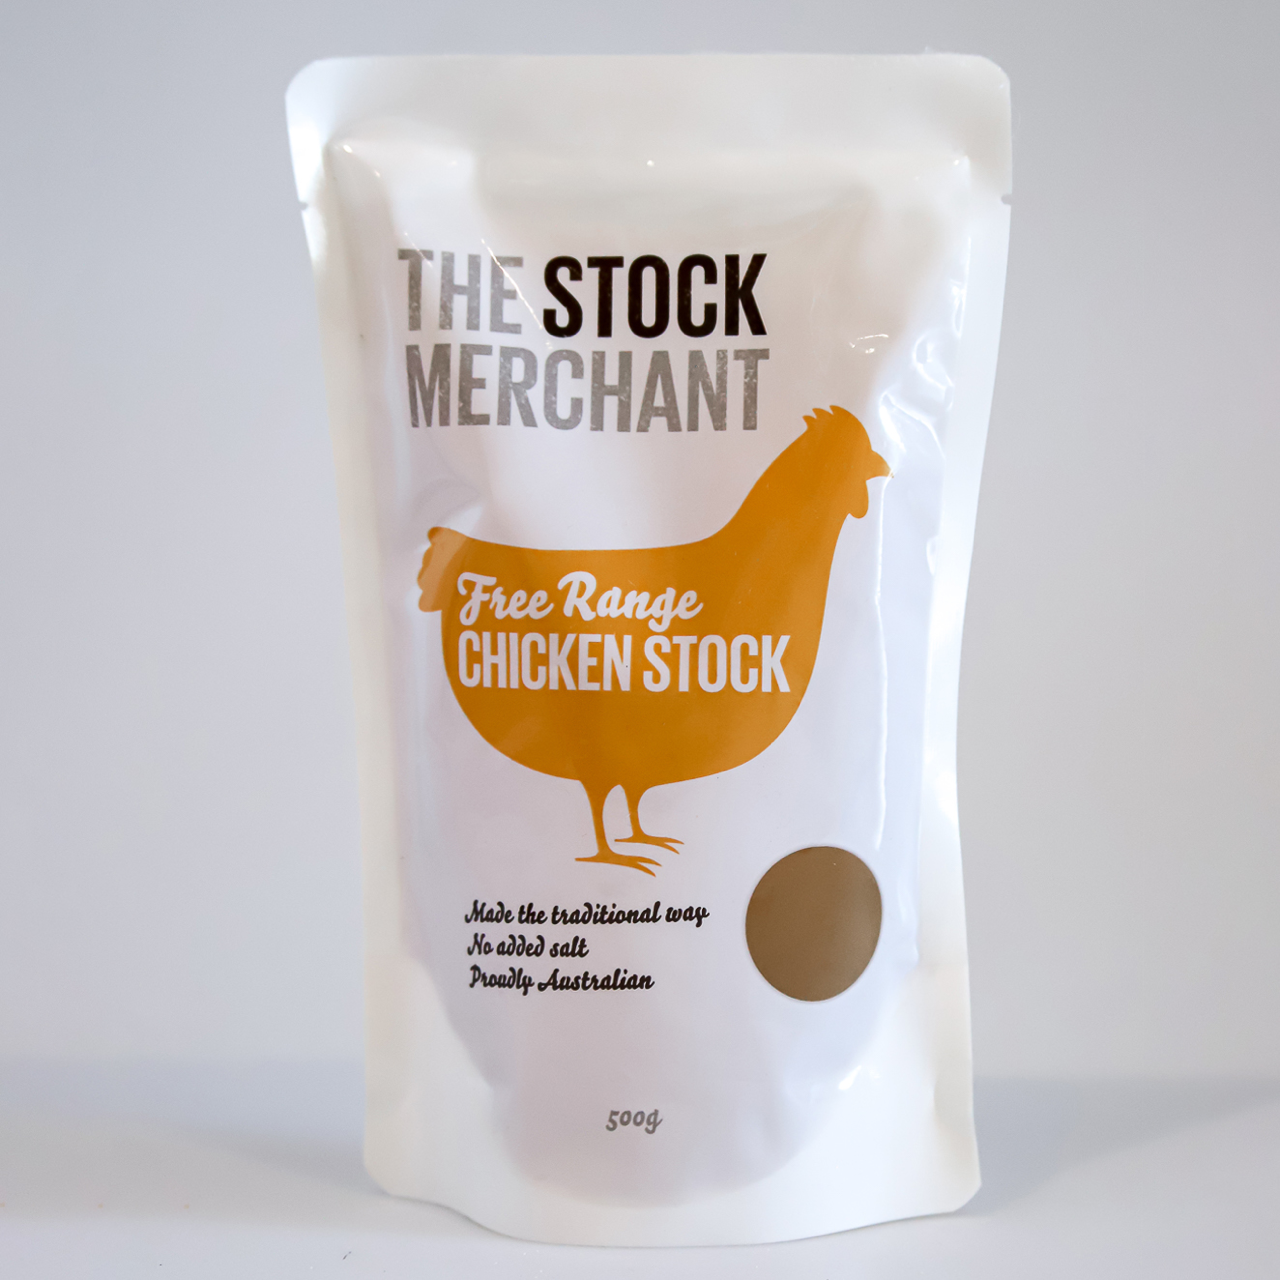 Free Range Chicken stock